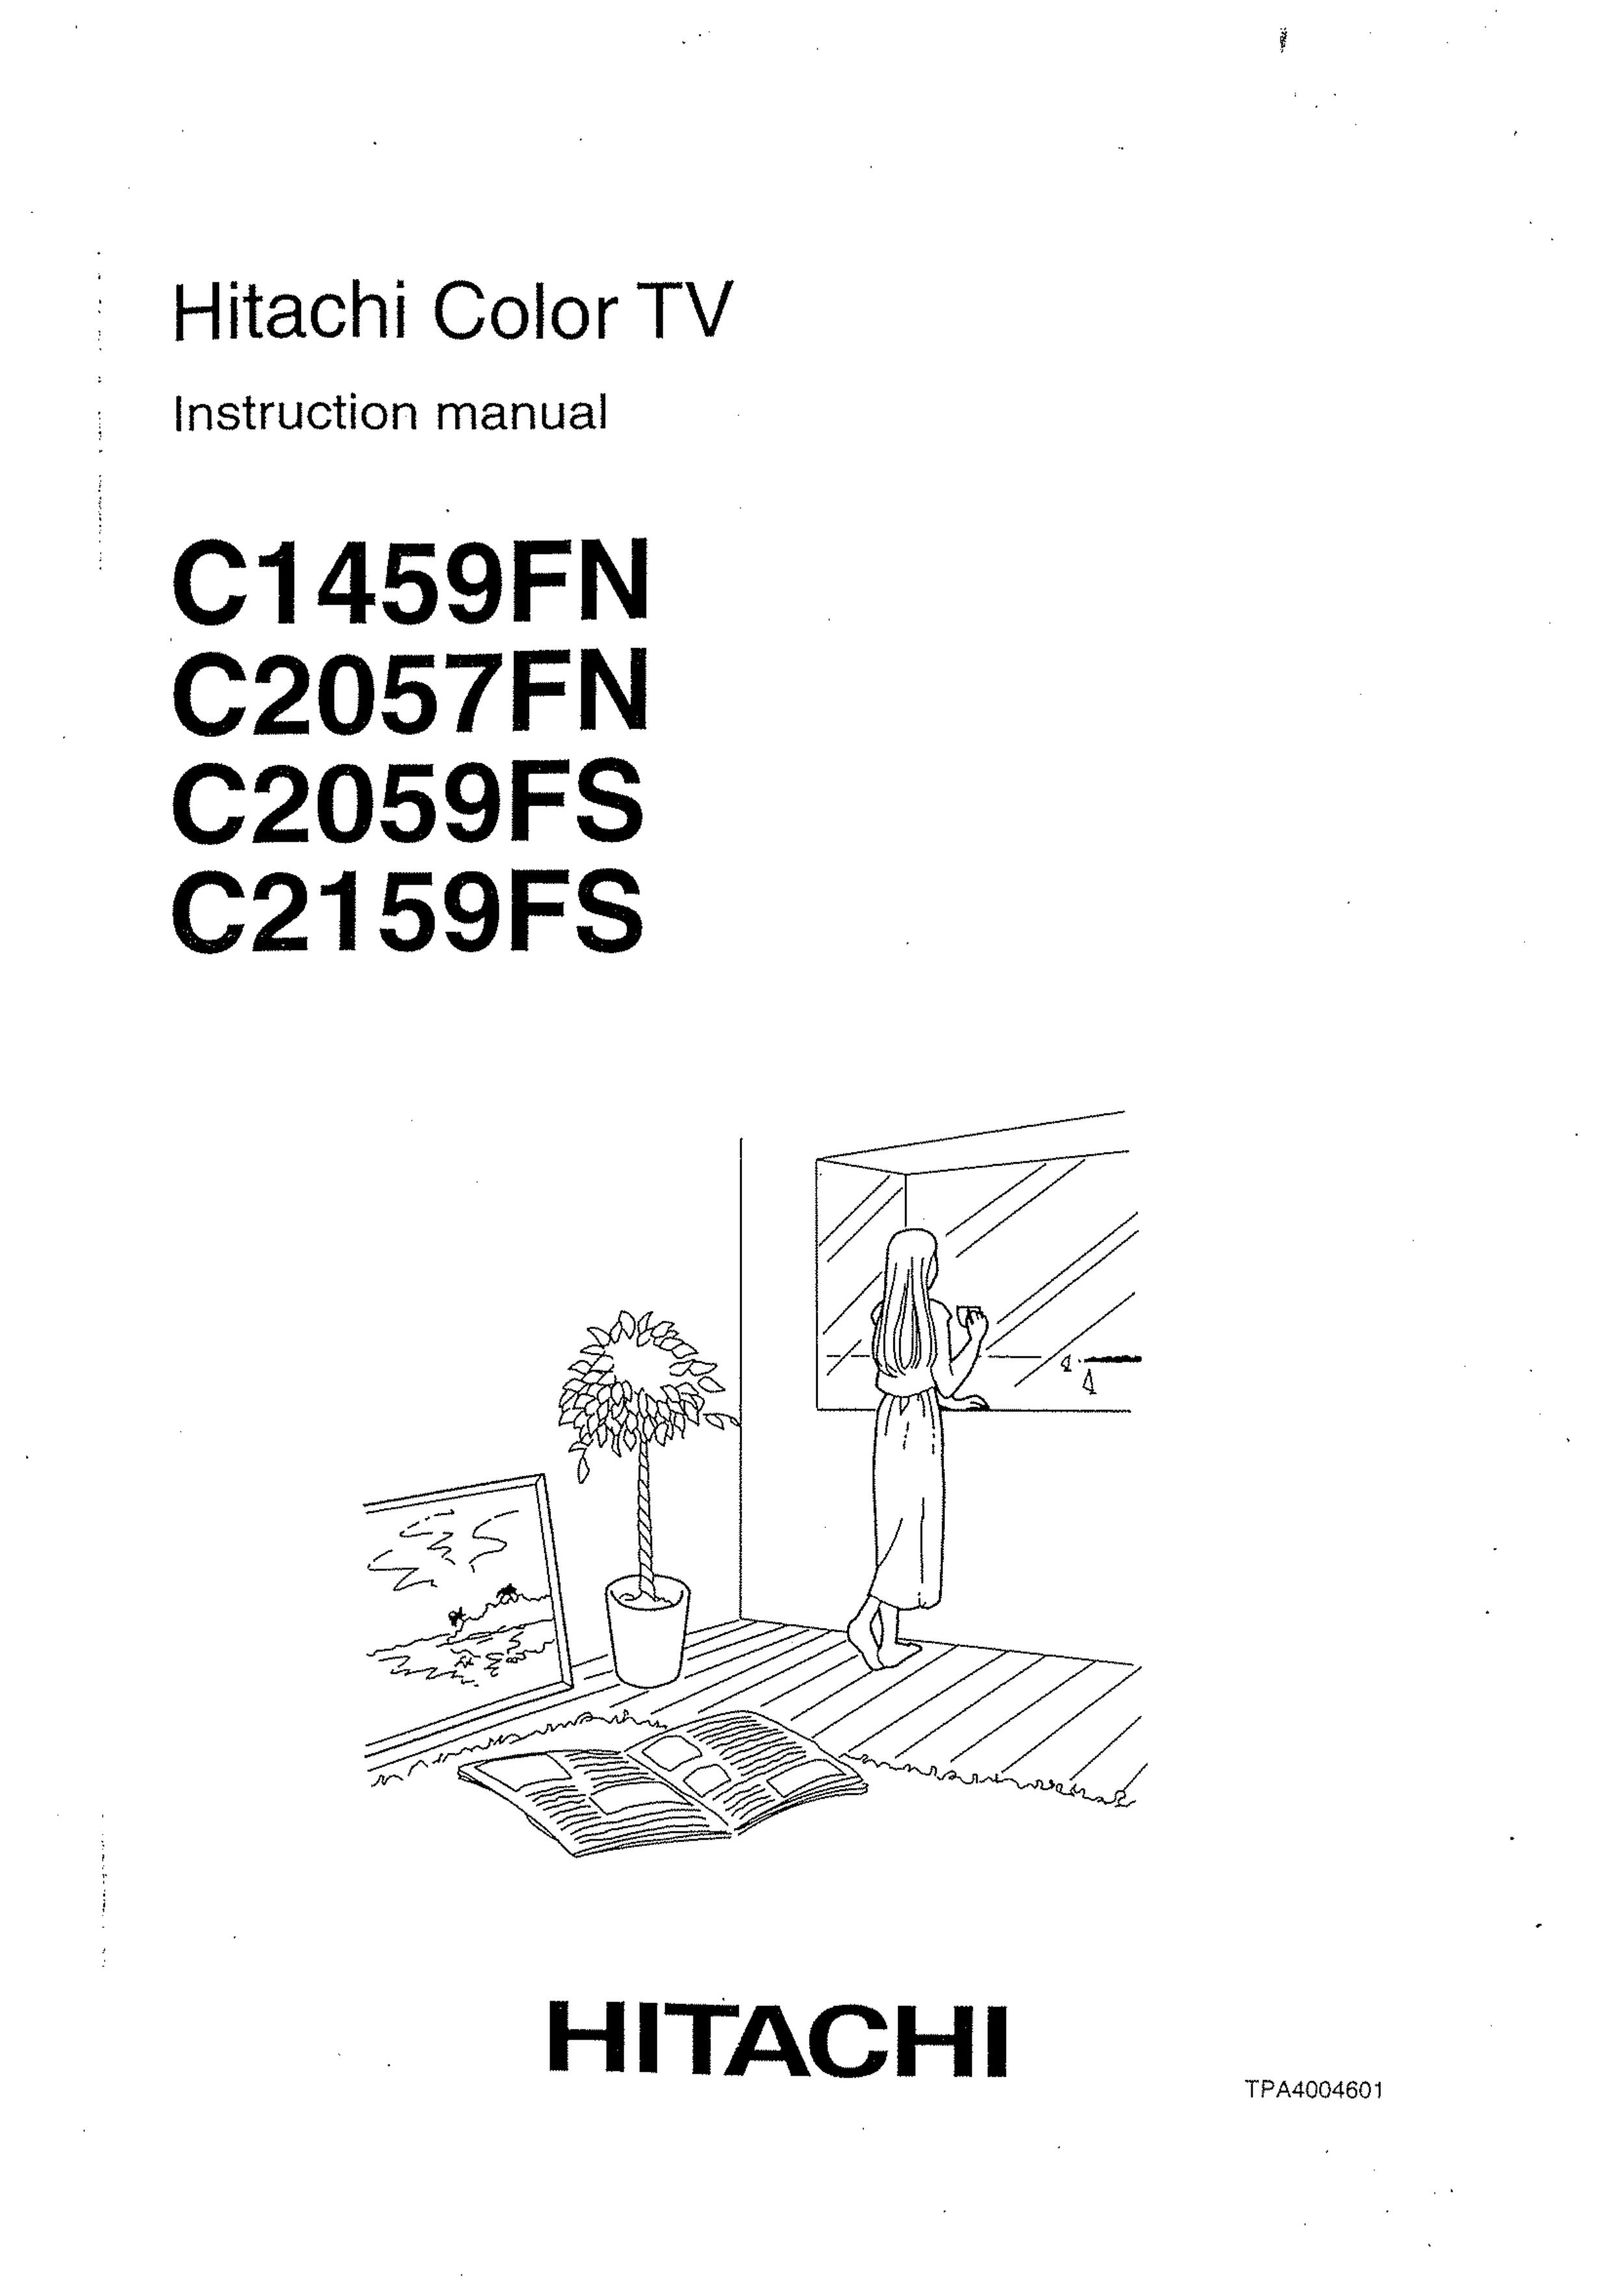 Hitachi C2059FS CRT Television User Manual